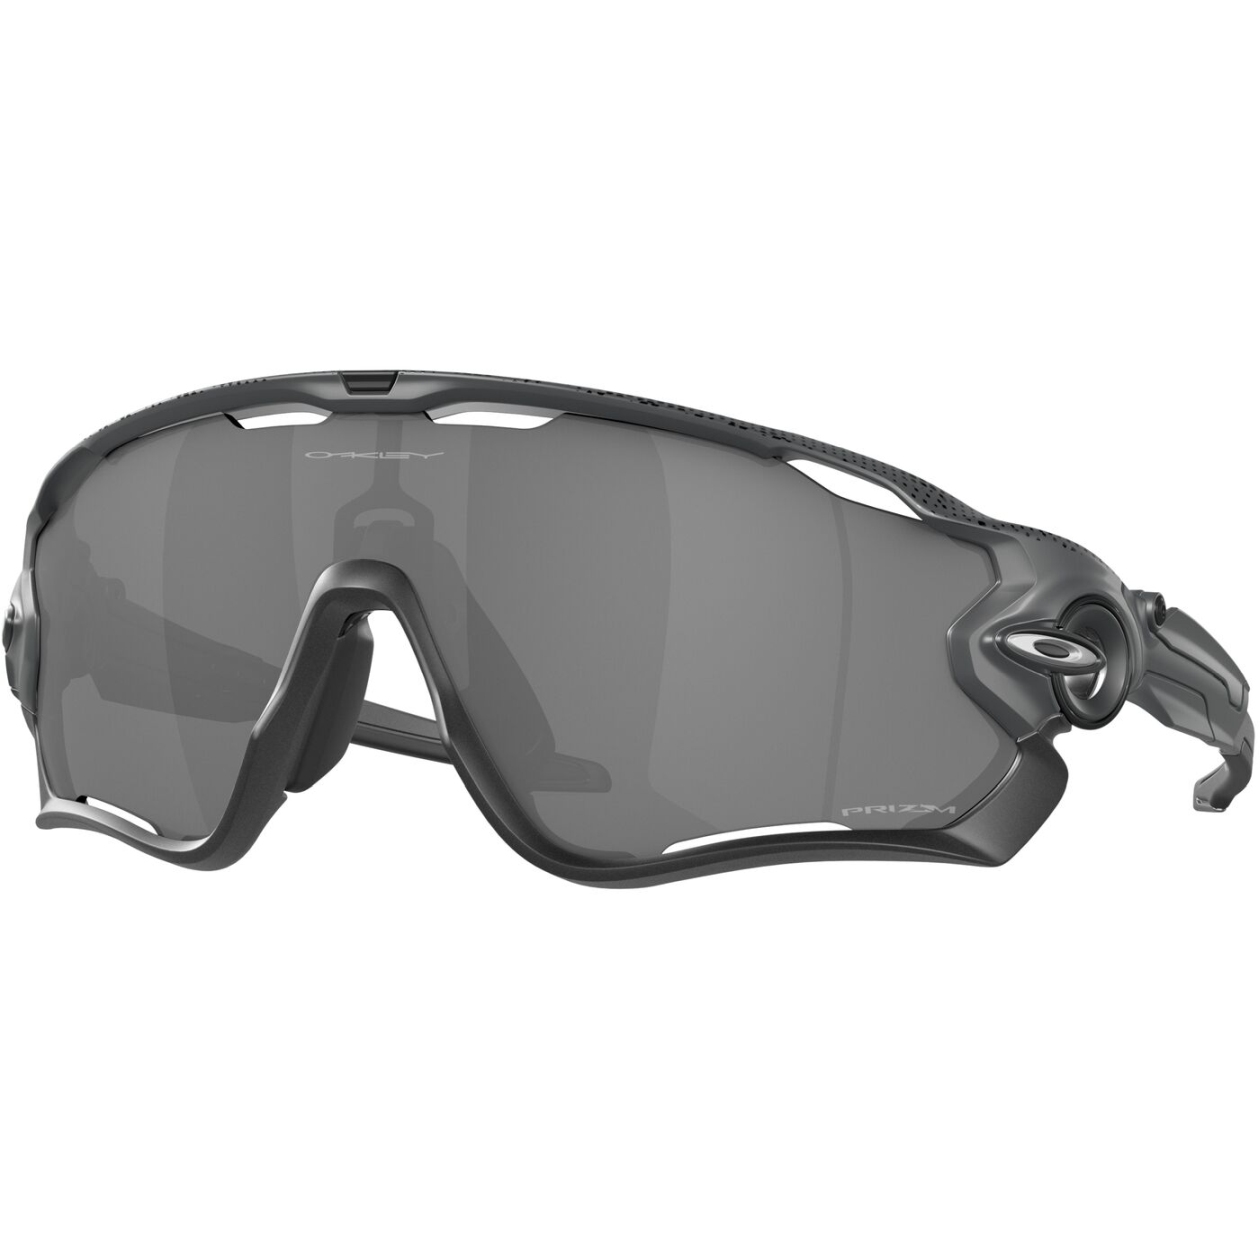 Oakley Jawbreaker - Tour de France™ Collection - Glasses - Matte 